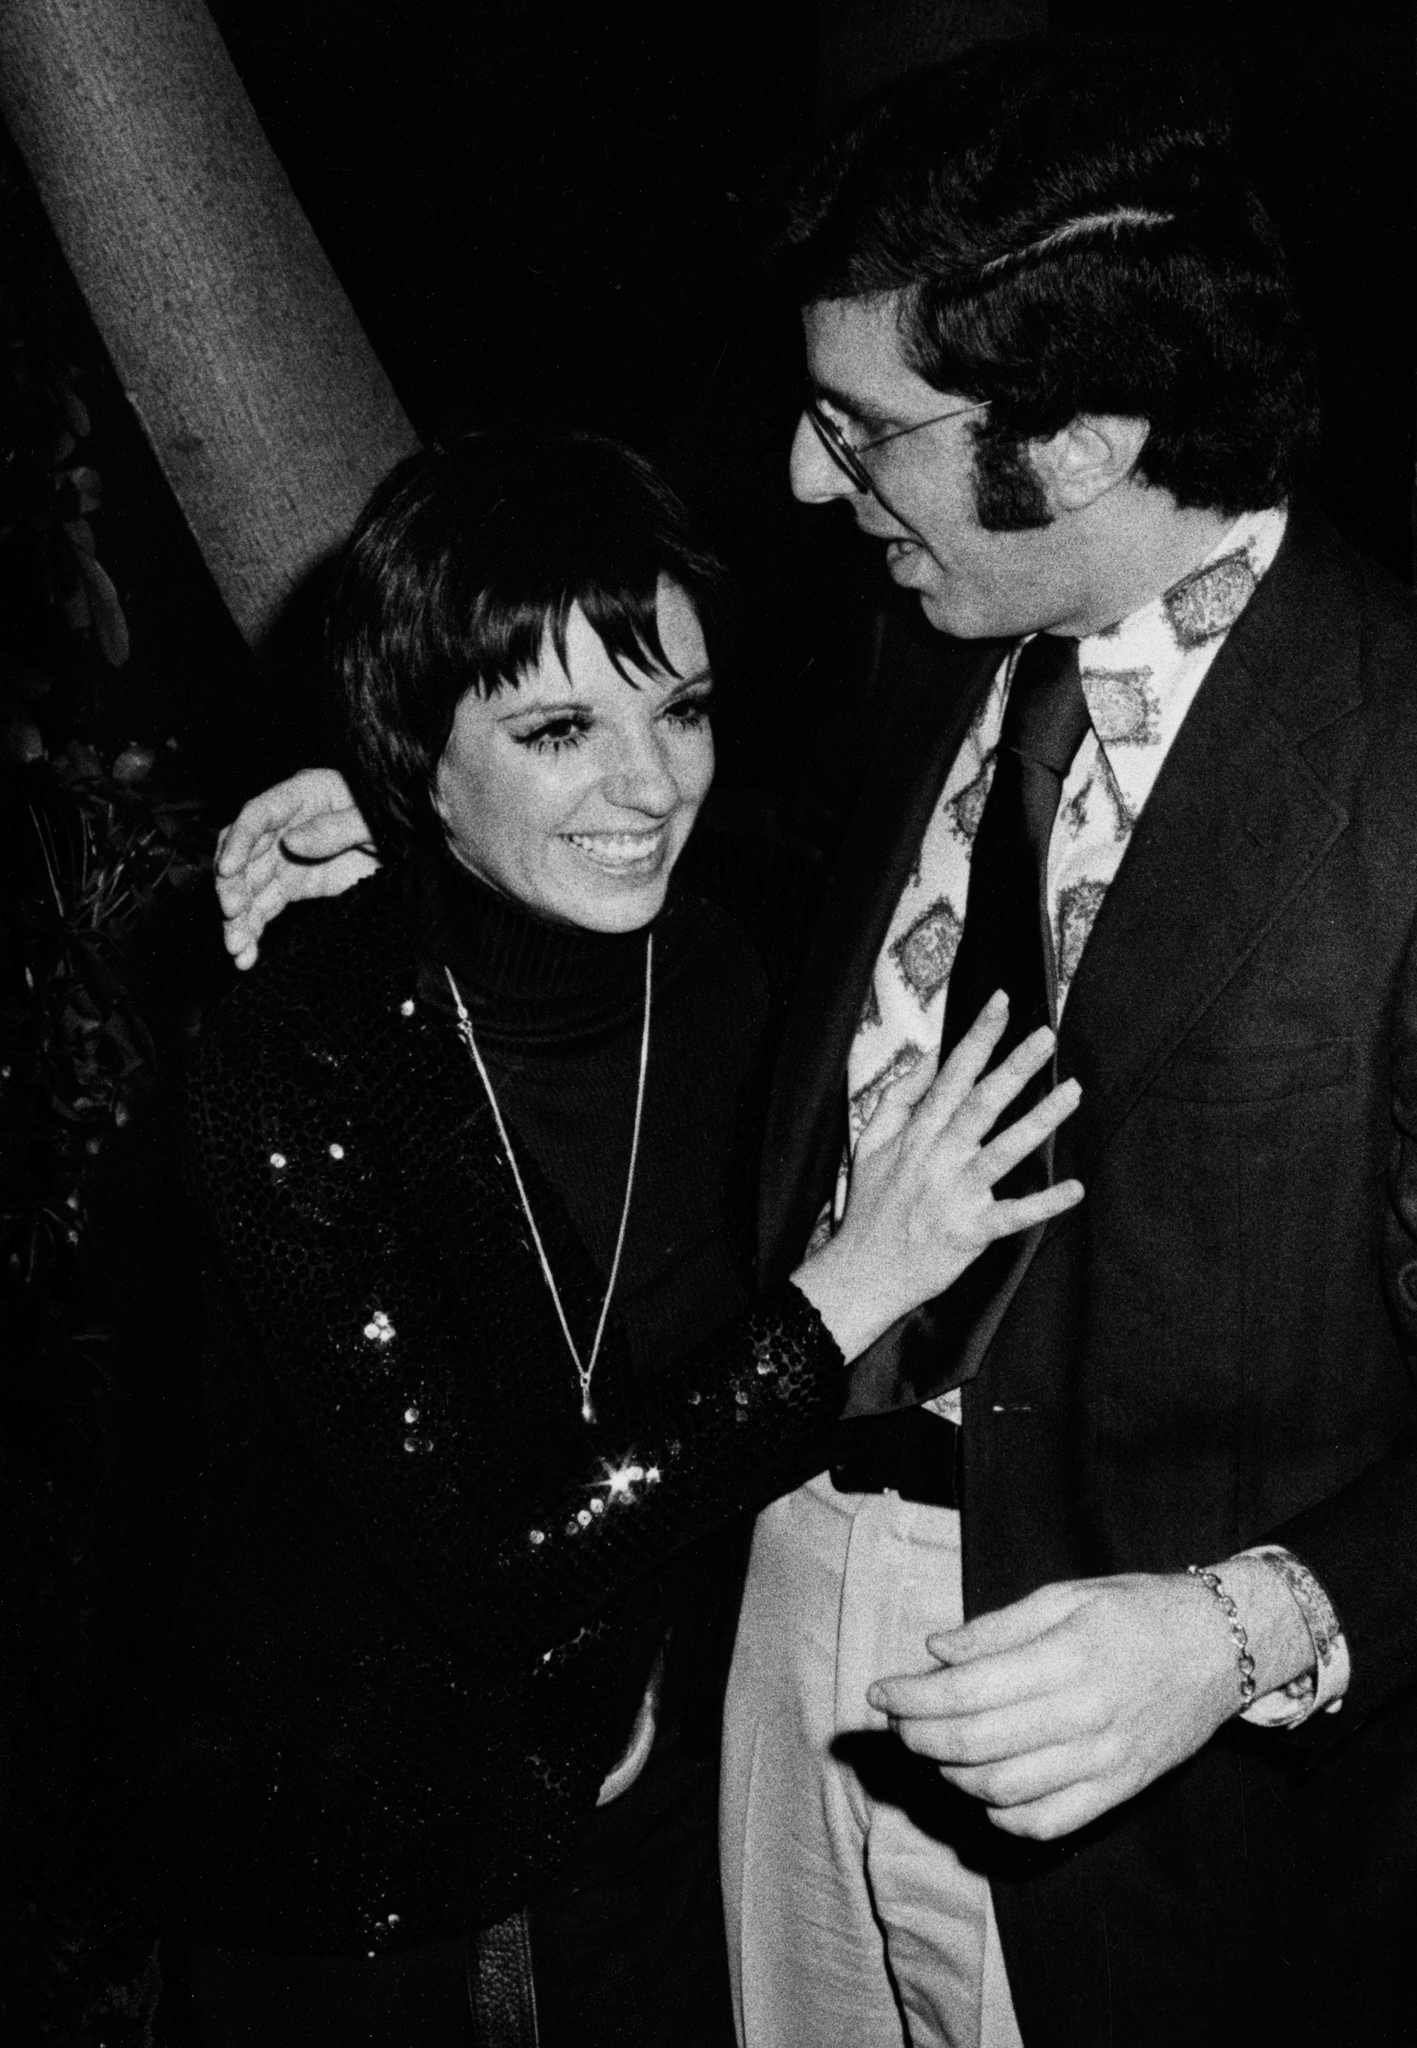 Marvin Hamlisch and Liza Minnelli